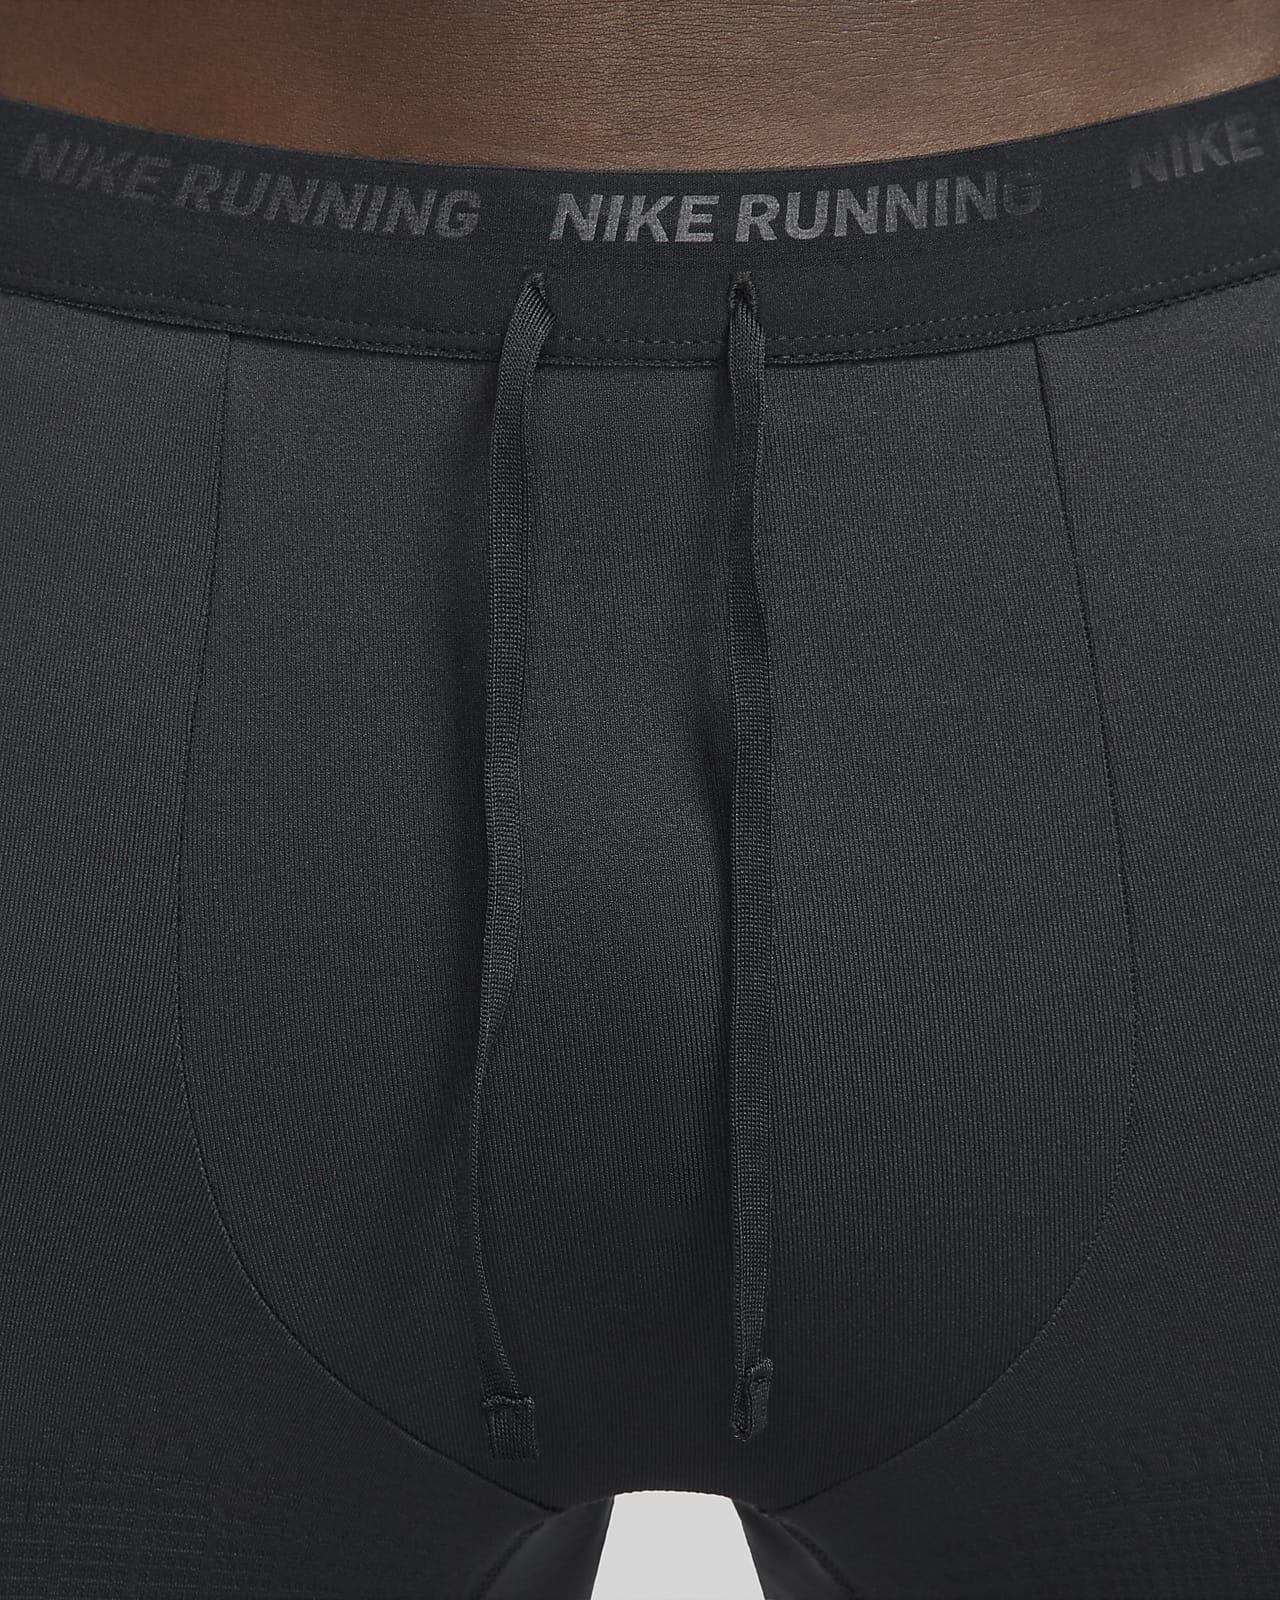 $80 NEW Nike Men's Dri-Fit Phenom Elite TECHKNIT Running Tights